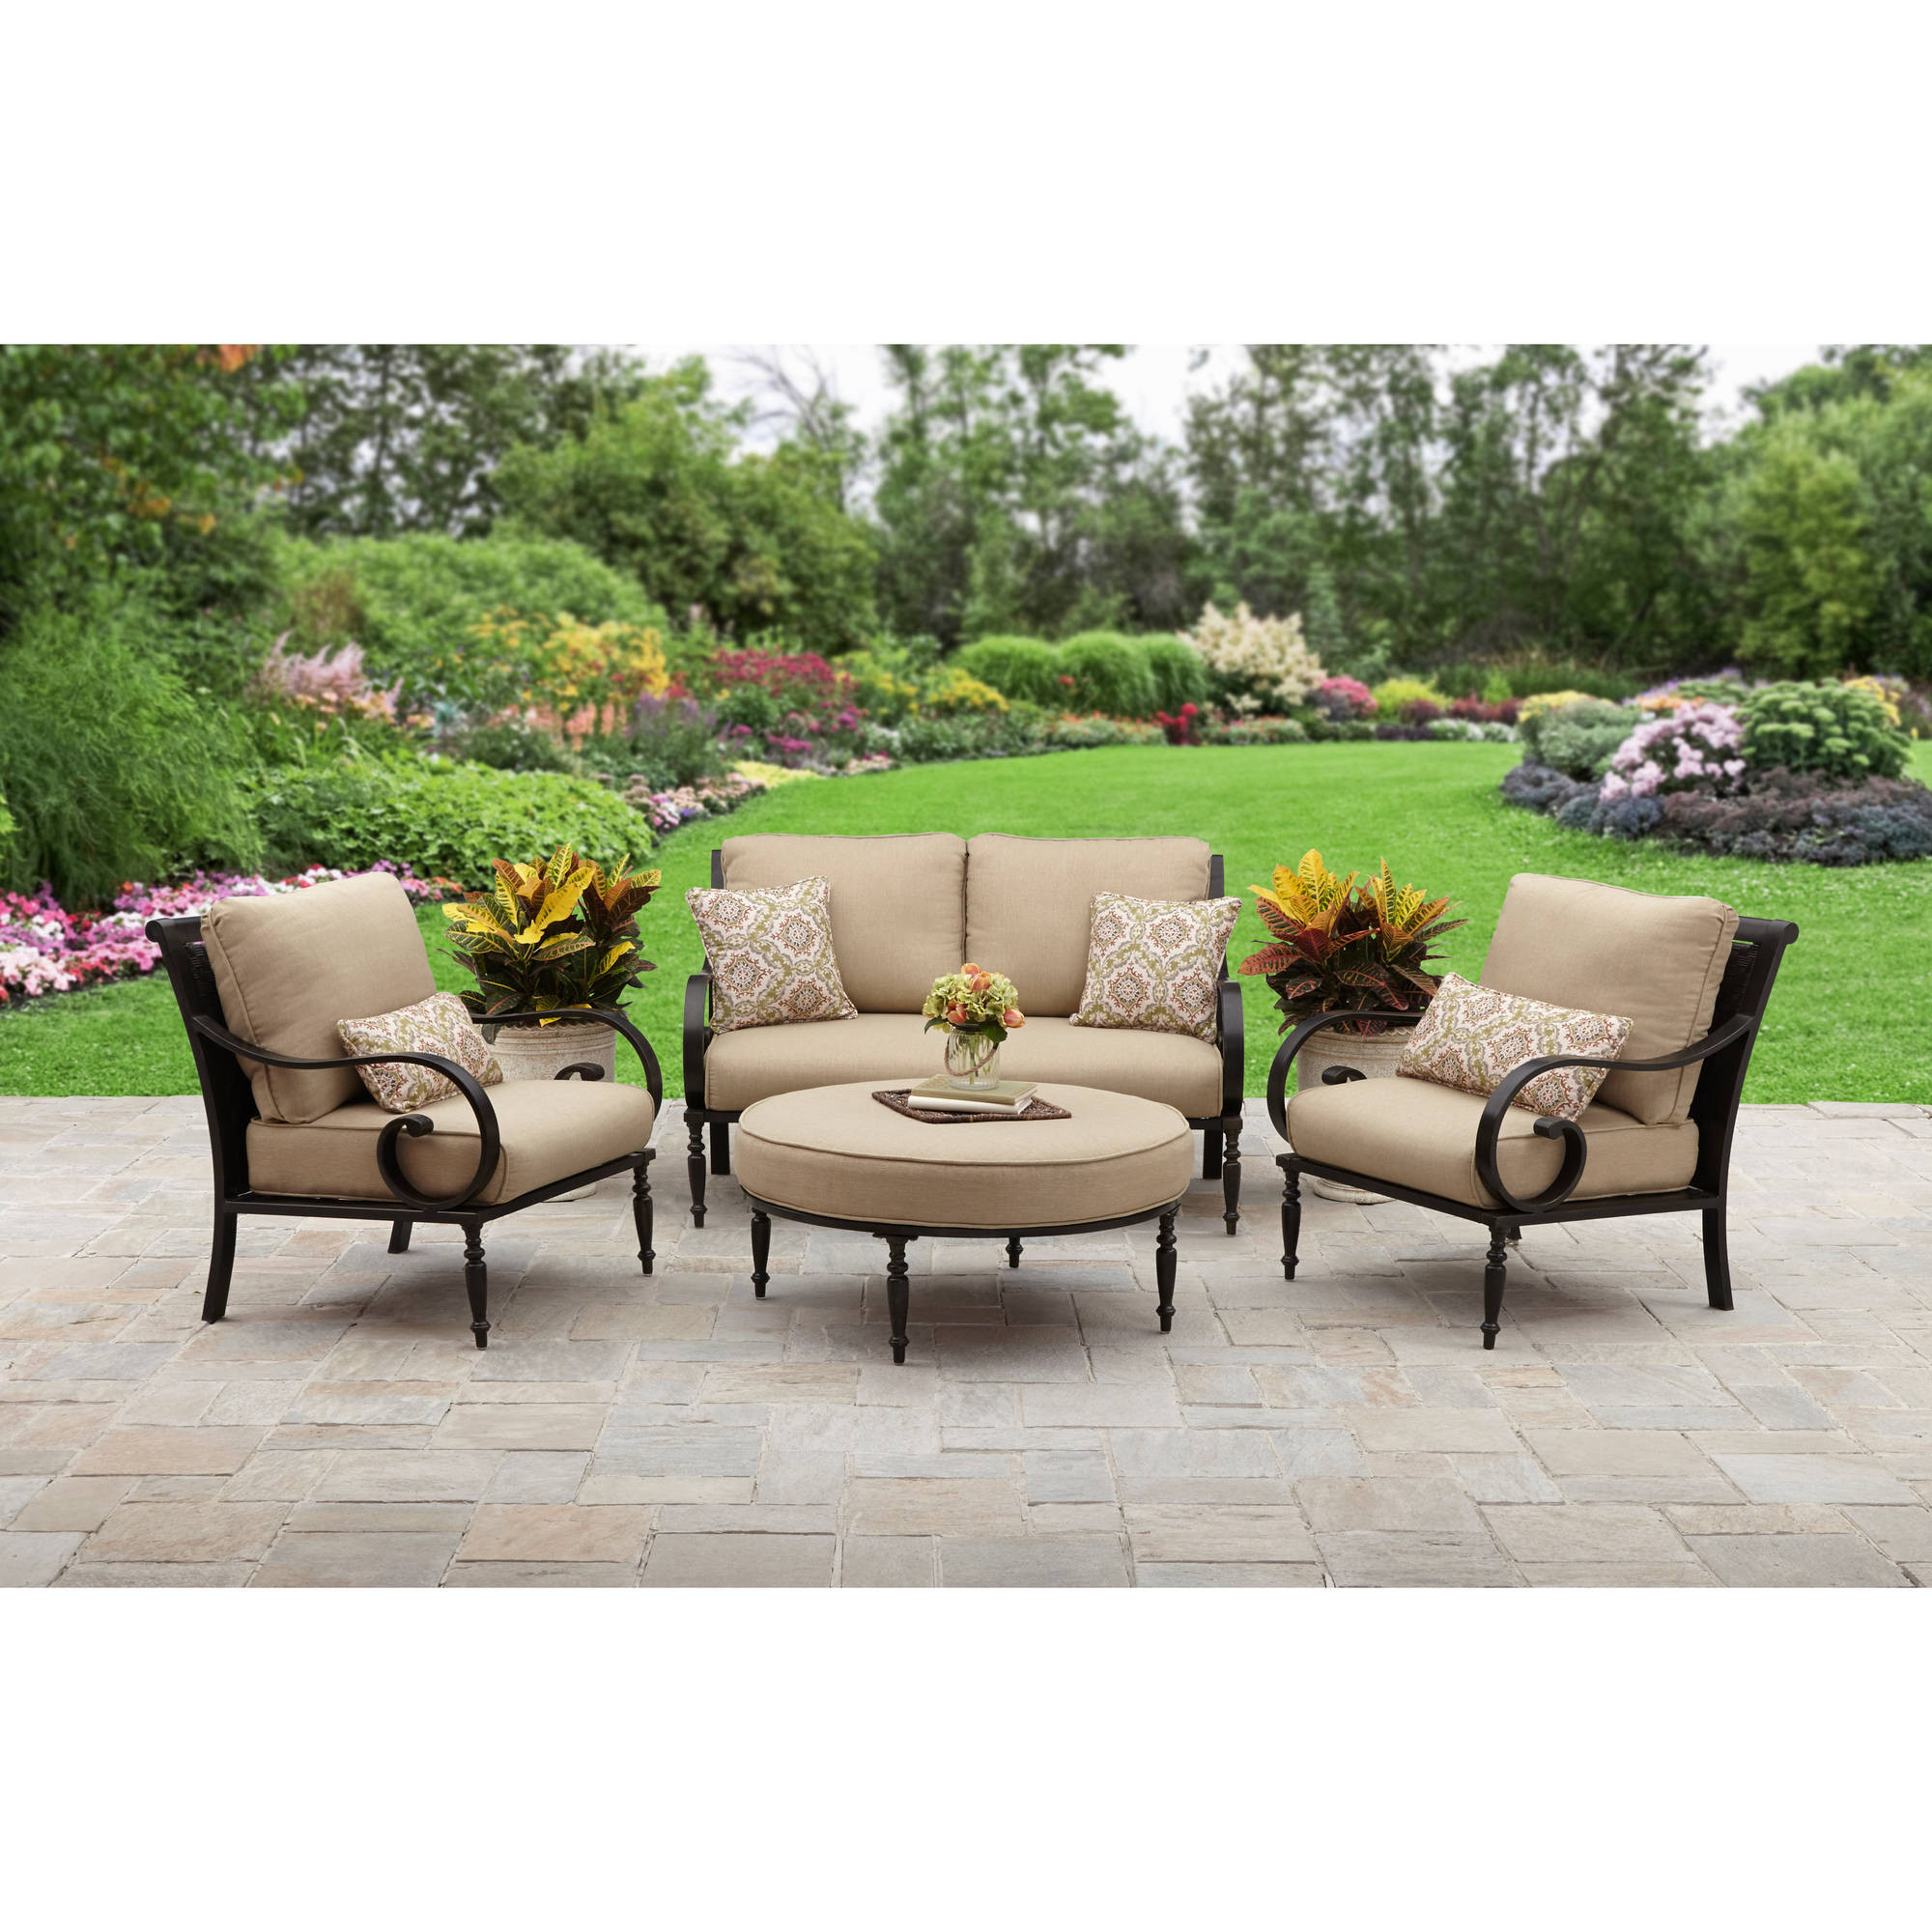 Best ideas about Walmart Outdoor Patio Furniture
. Save or Pin Walmart Patio Cushions Better Homes Gardens Garden Now.